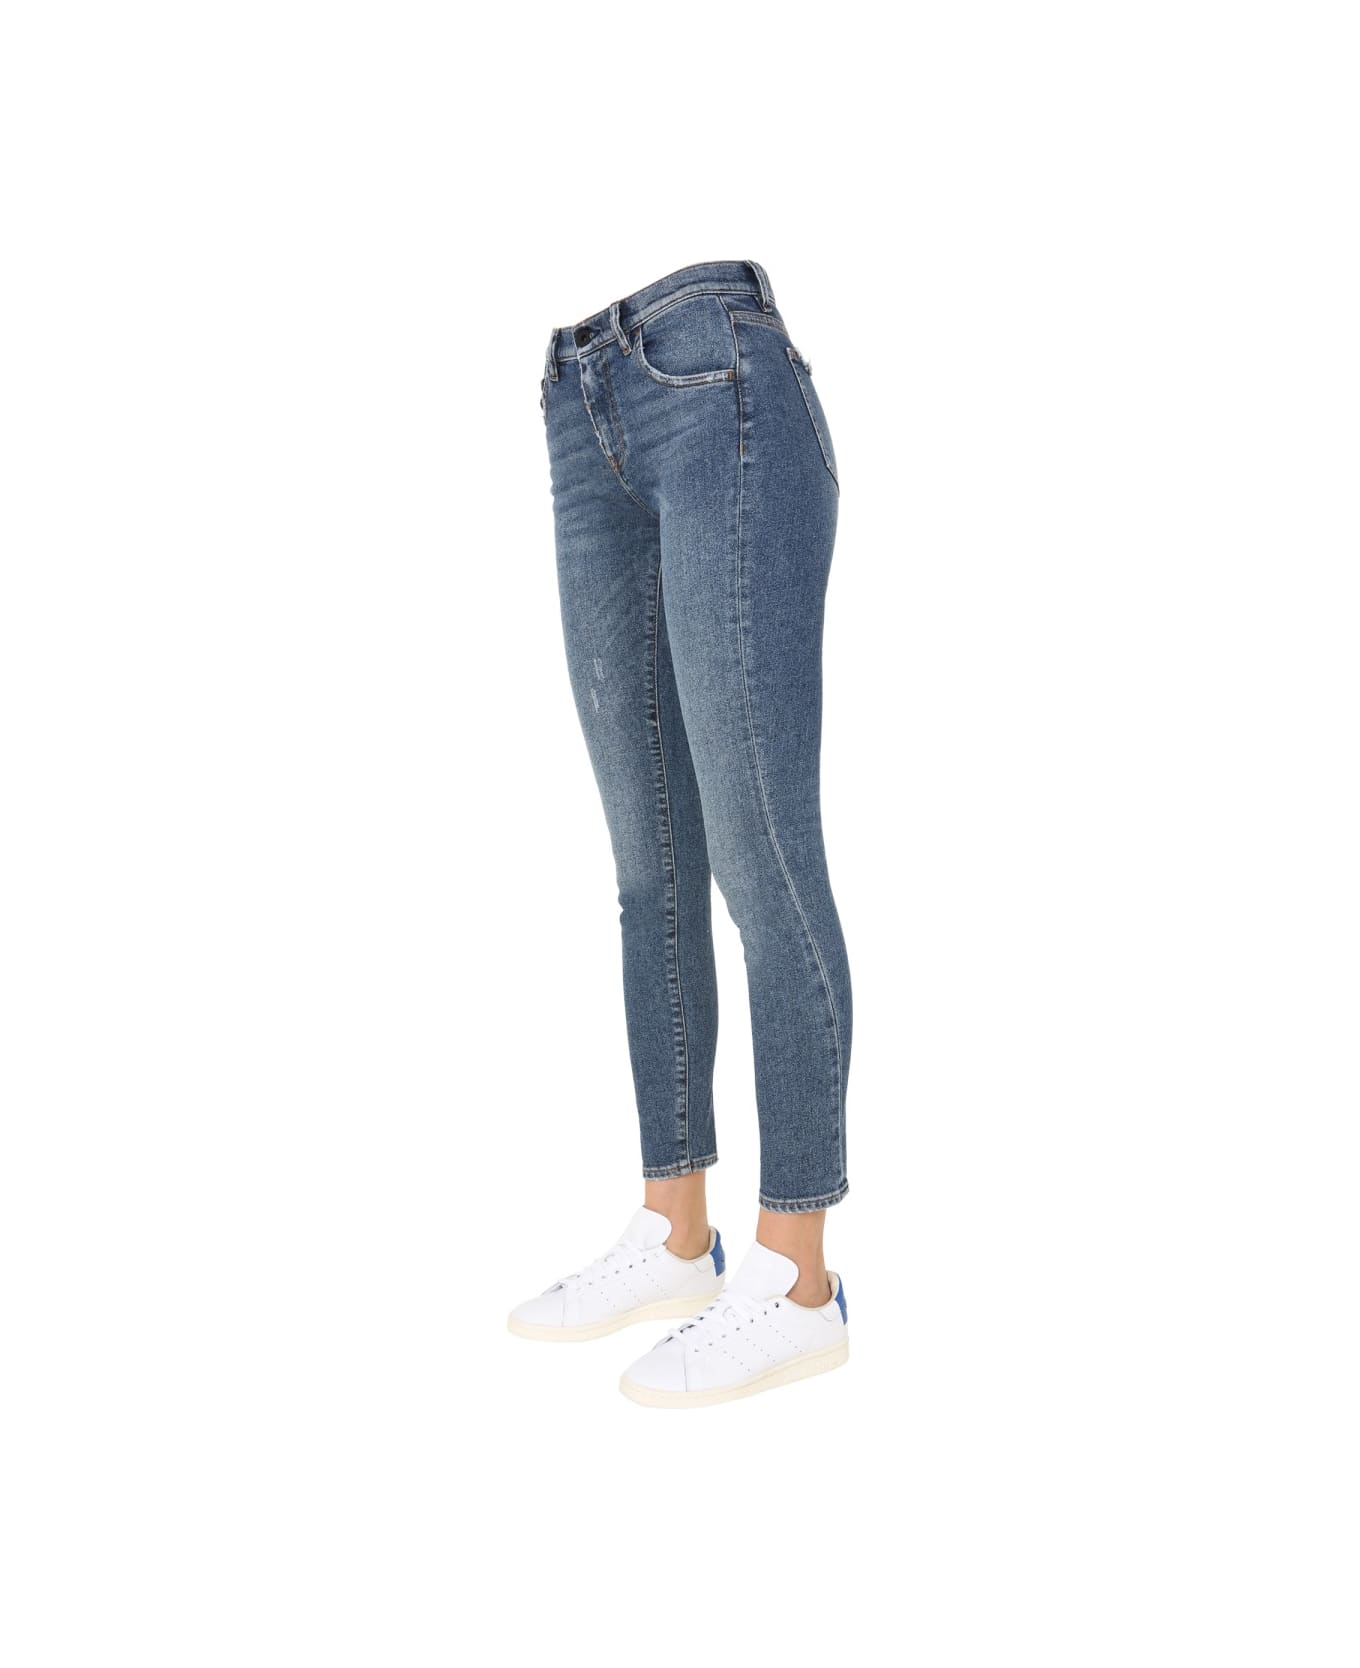 Pence "sofia" Jeans - DENIM